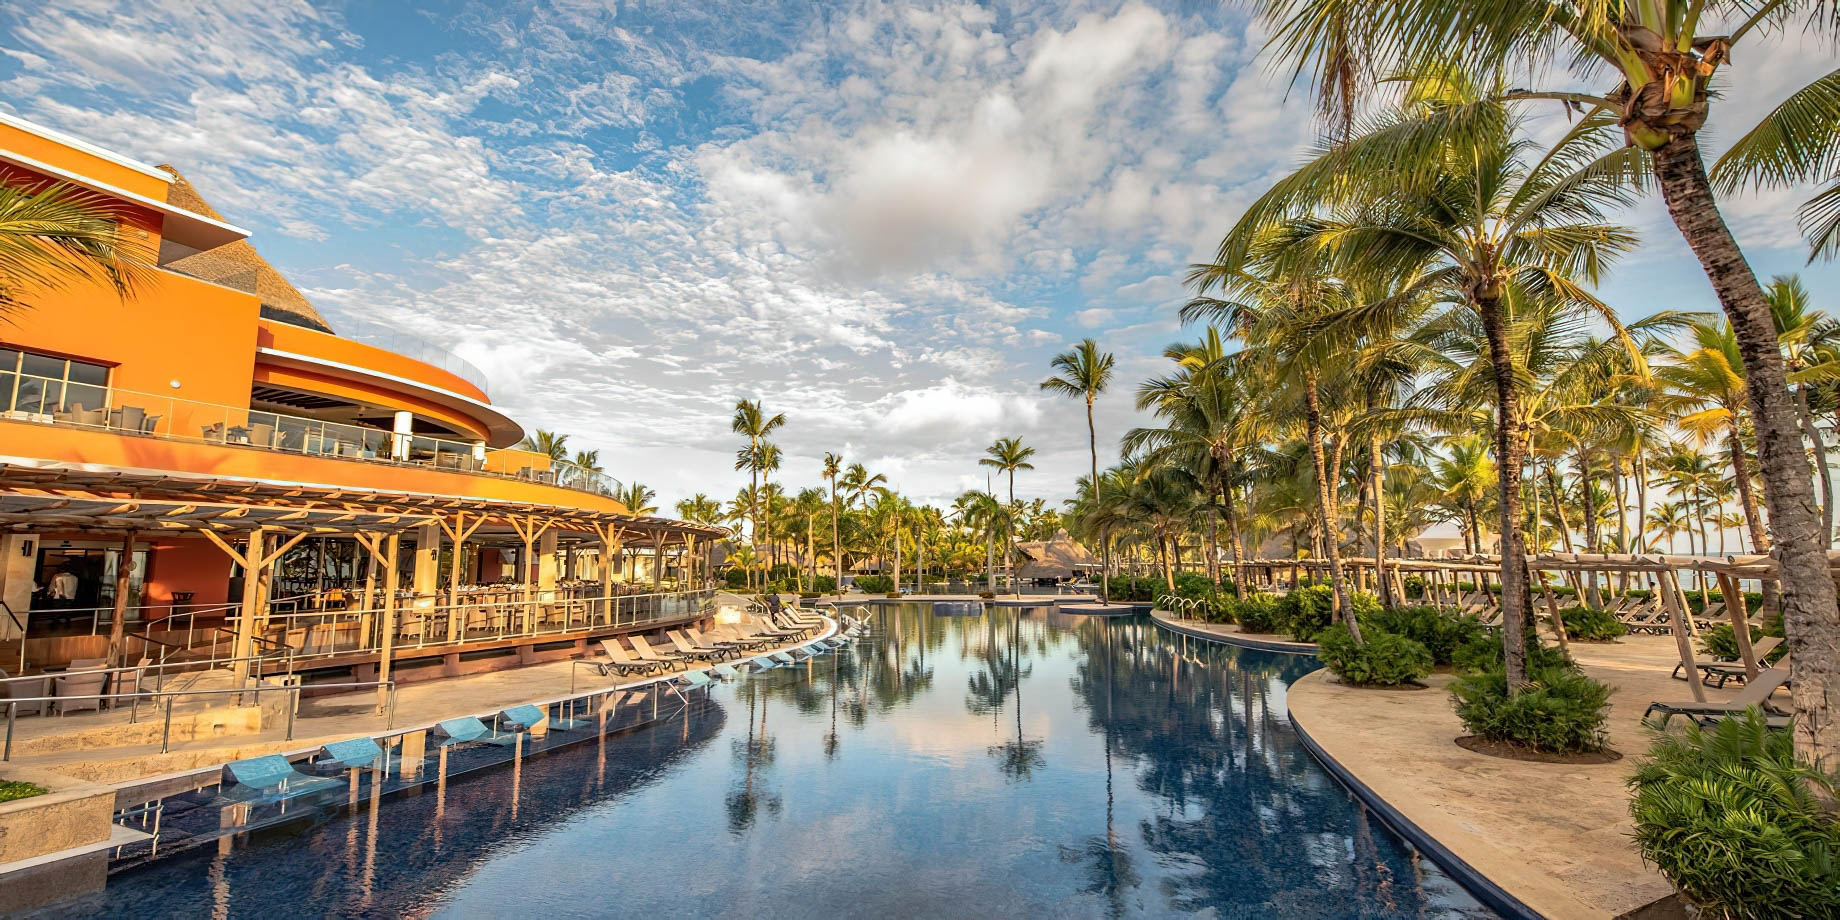 Barceló Bávaro Palace Hotel Grand Resort – Punta Cana, Dominican Republic – Pool